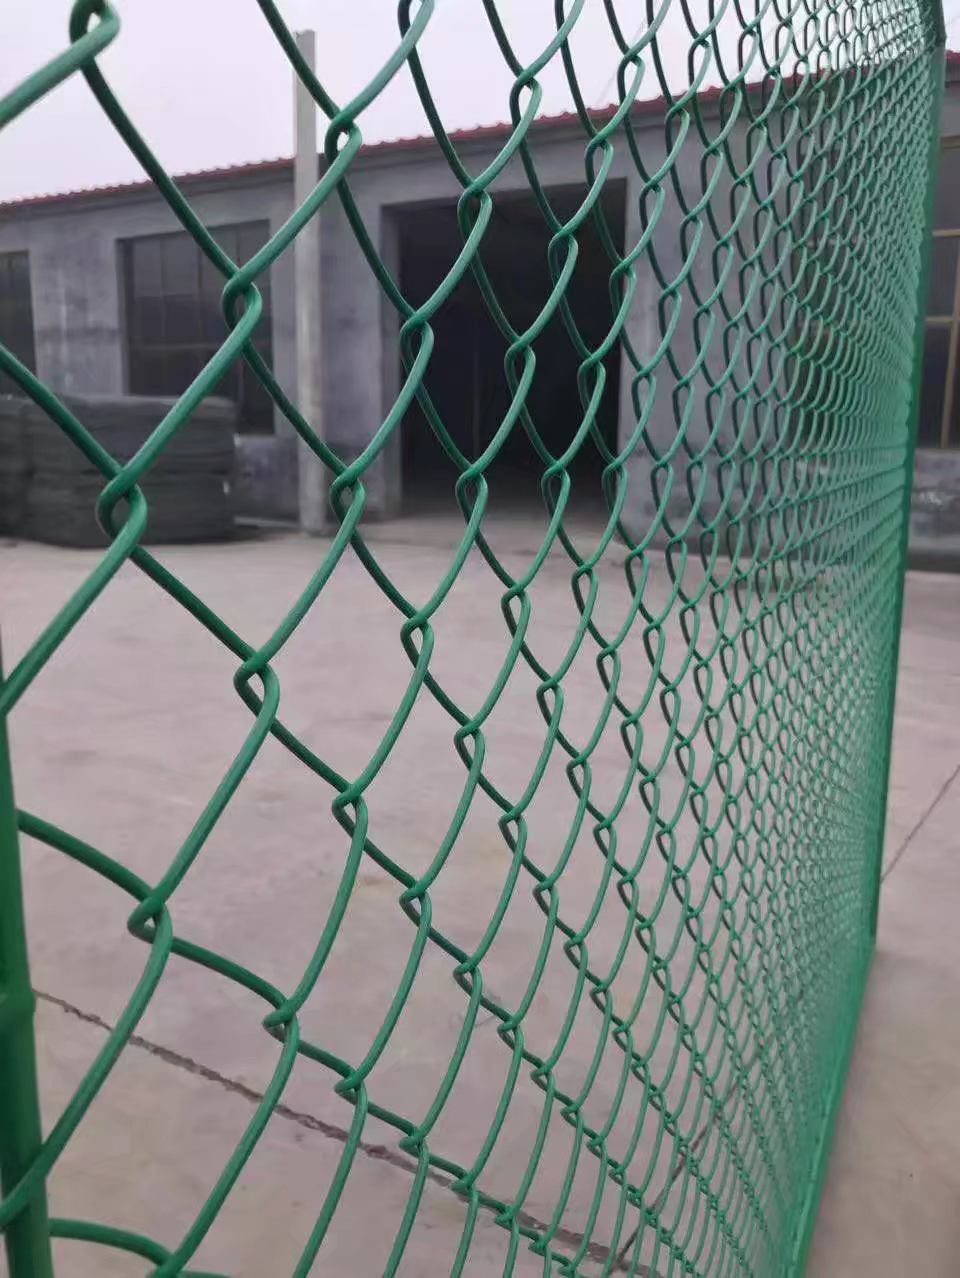 The knowledge of stadium fence